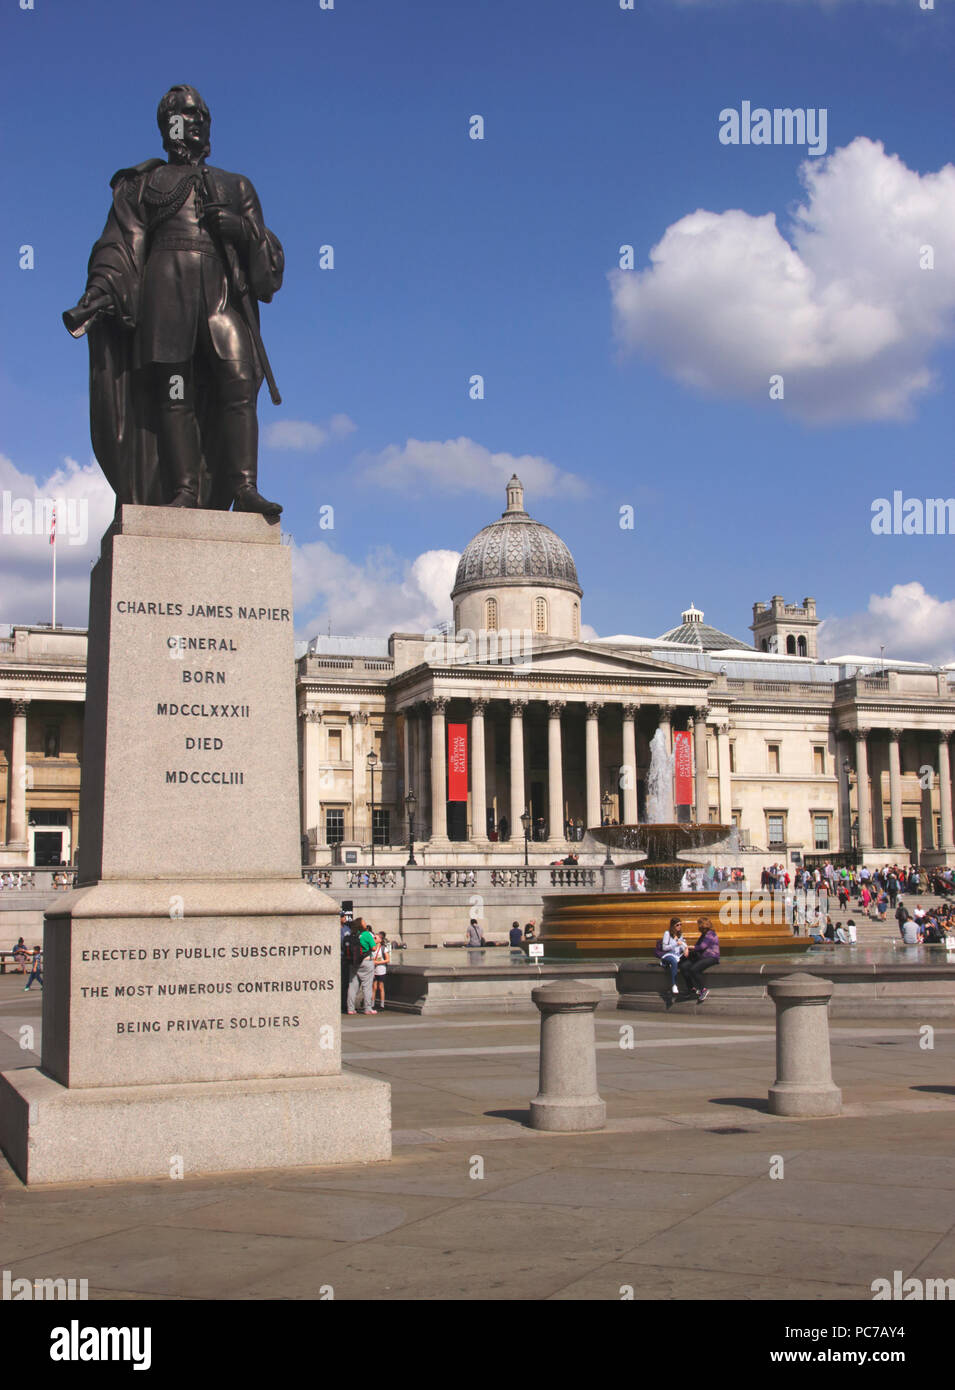 Charles James Napier statue Trafalgar Square London Stock Photo